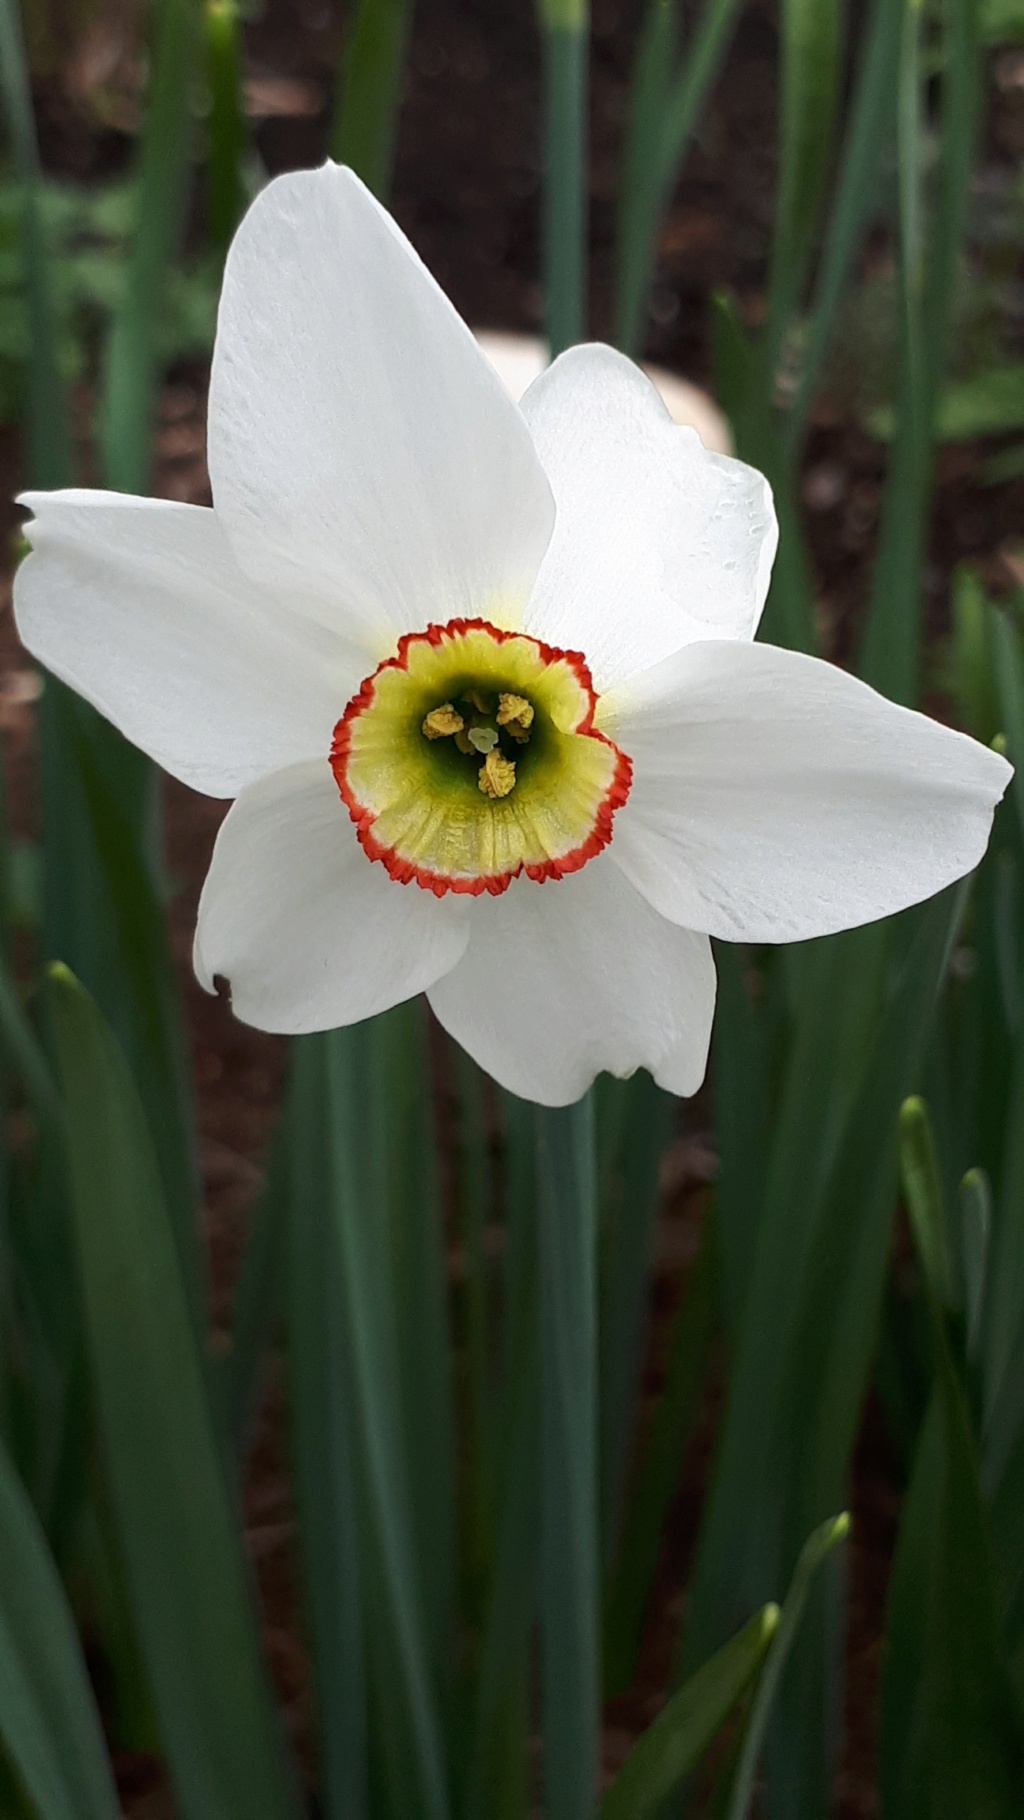 Narcisse, Narcisse des po&egrave;tes, Narcissus poeticus 